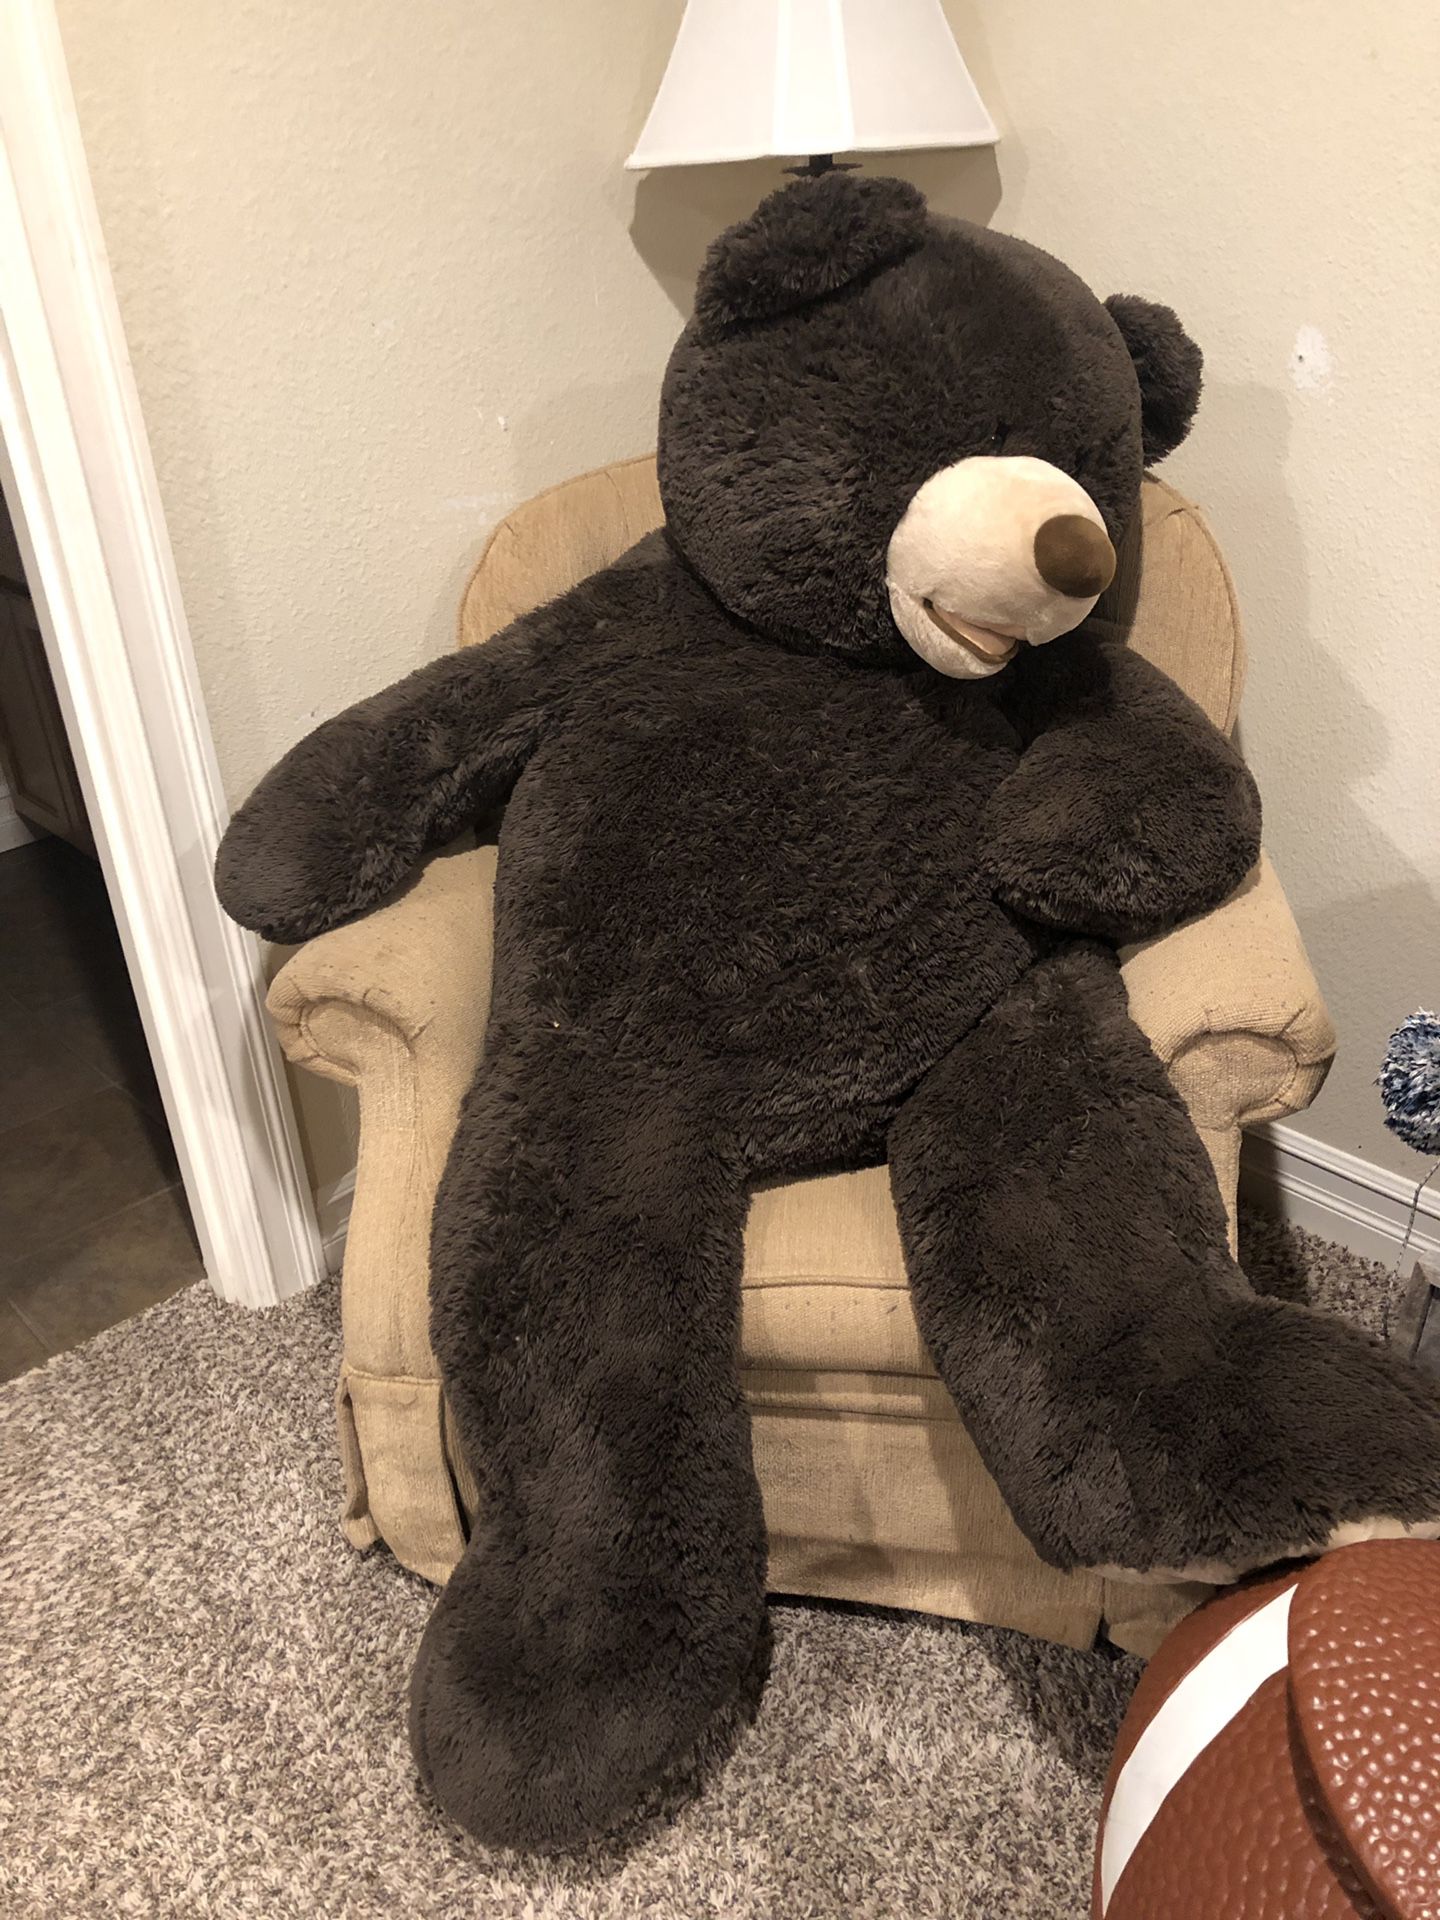 BIG Teddy Bear!